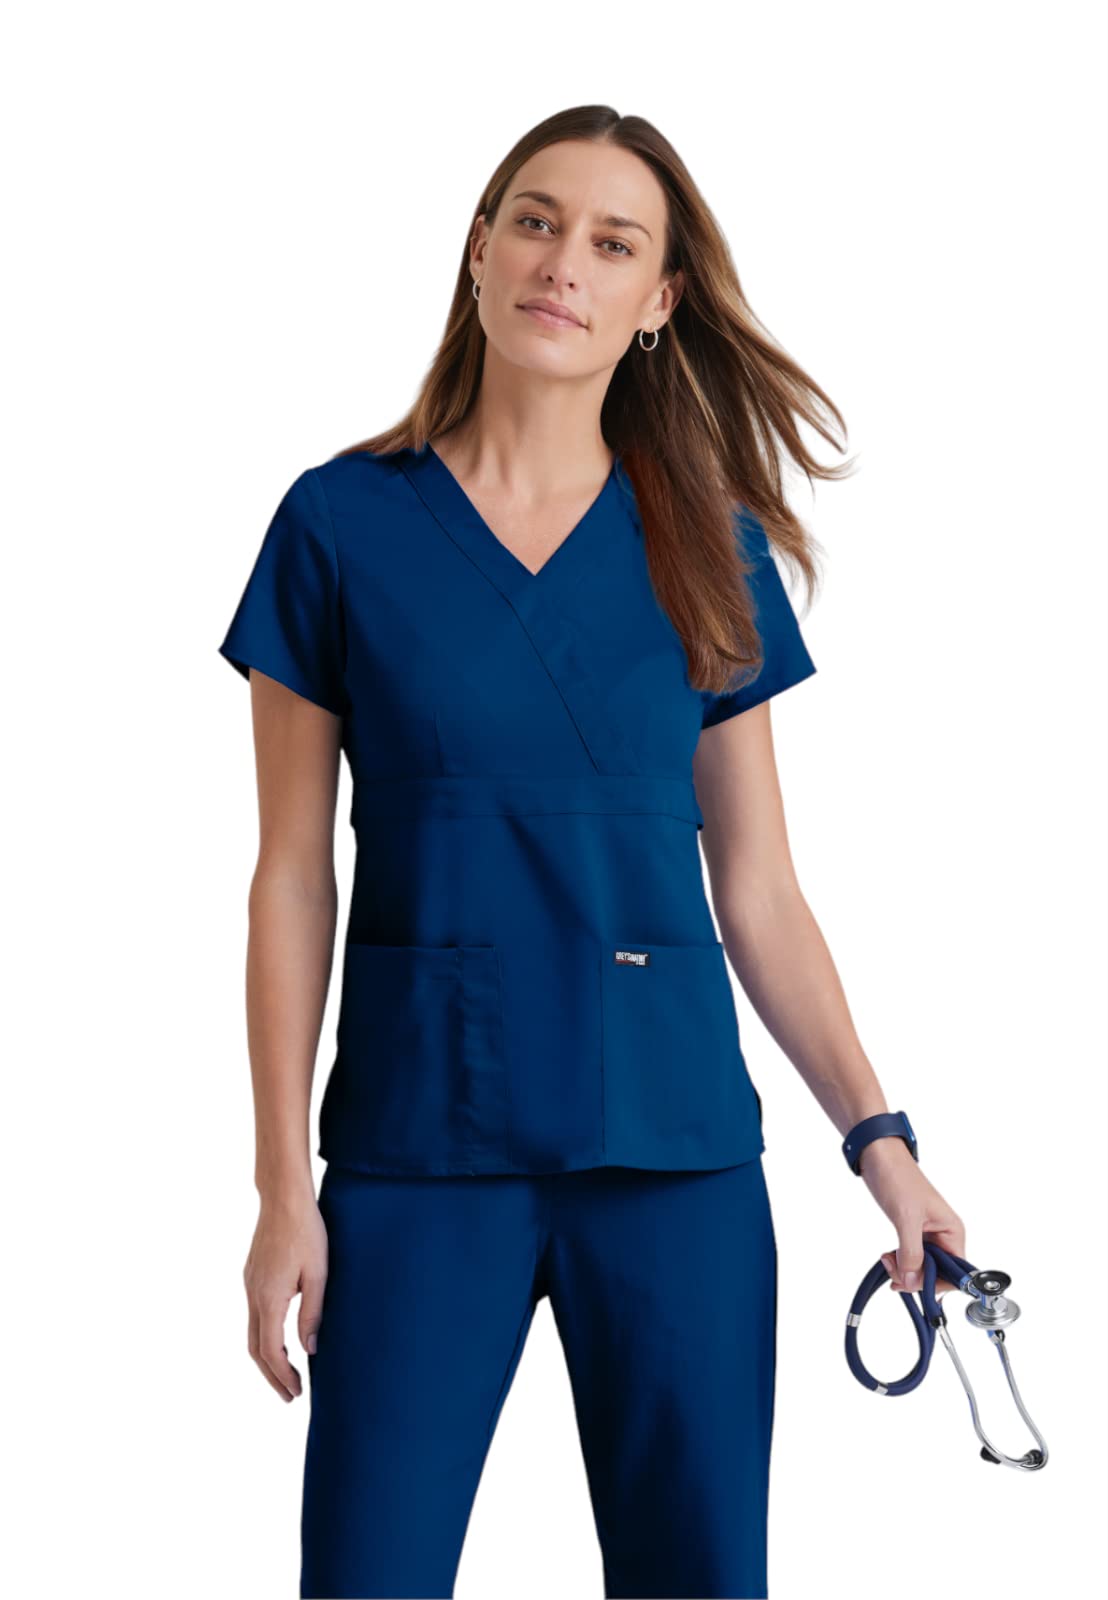 BARCO Grey's Anatomy Scrubs - Riley Scrub Top for Women, V-Neck Super-Soft Women's Scrub Top